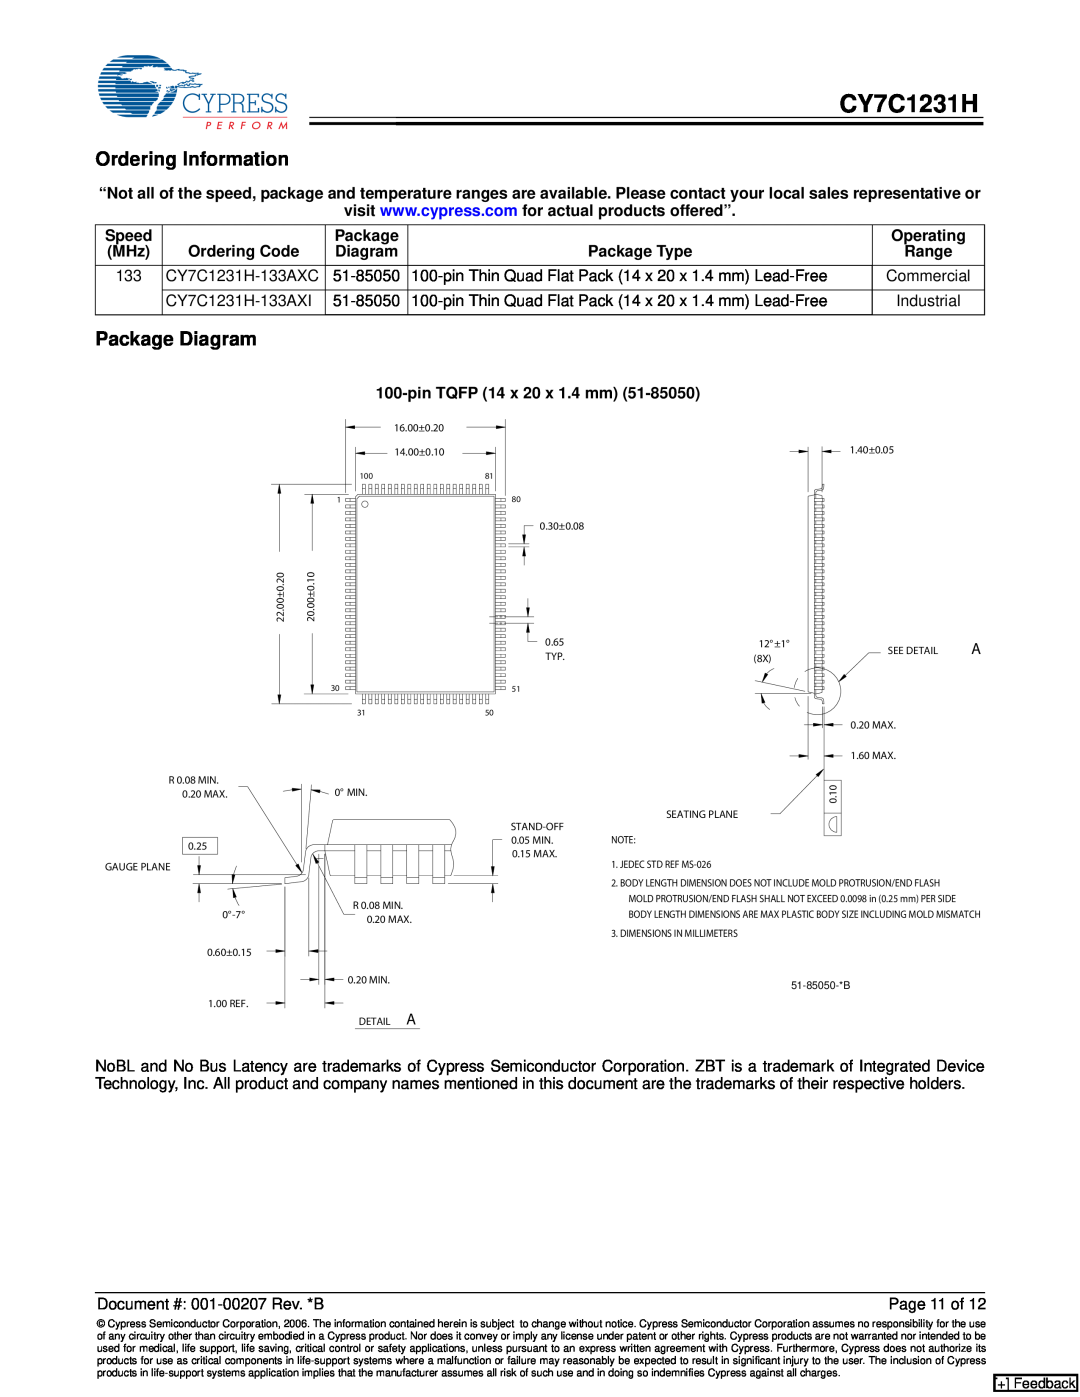 Cypress CY7C1231H manual Ordering Information, Package Diagram 